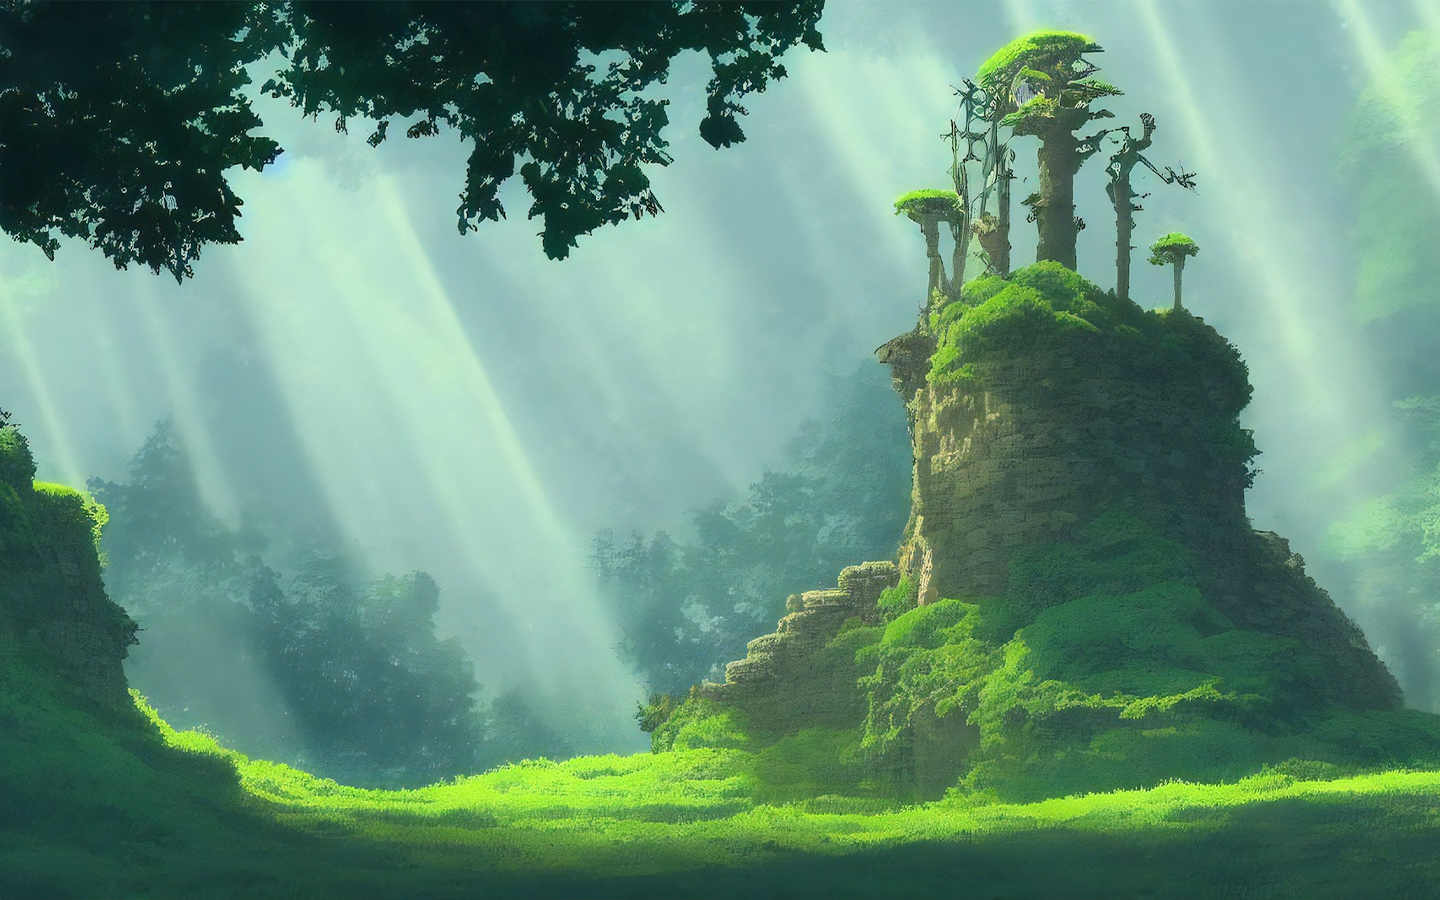 Six Studio Ghibli films you can’t miss (plus one bonus)